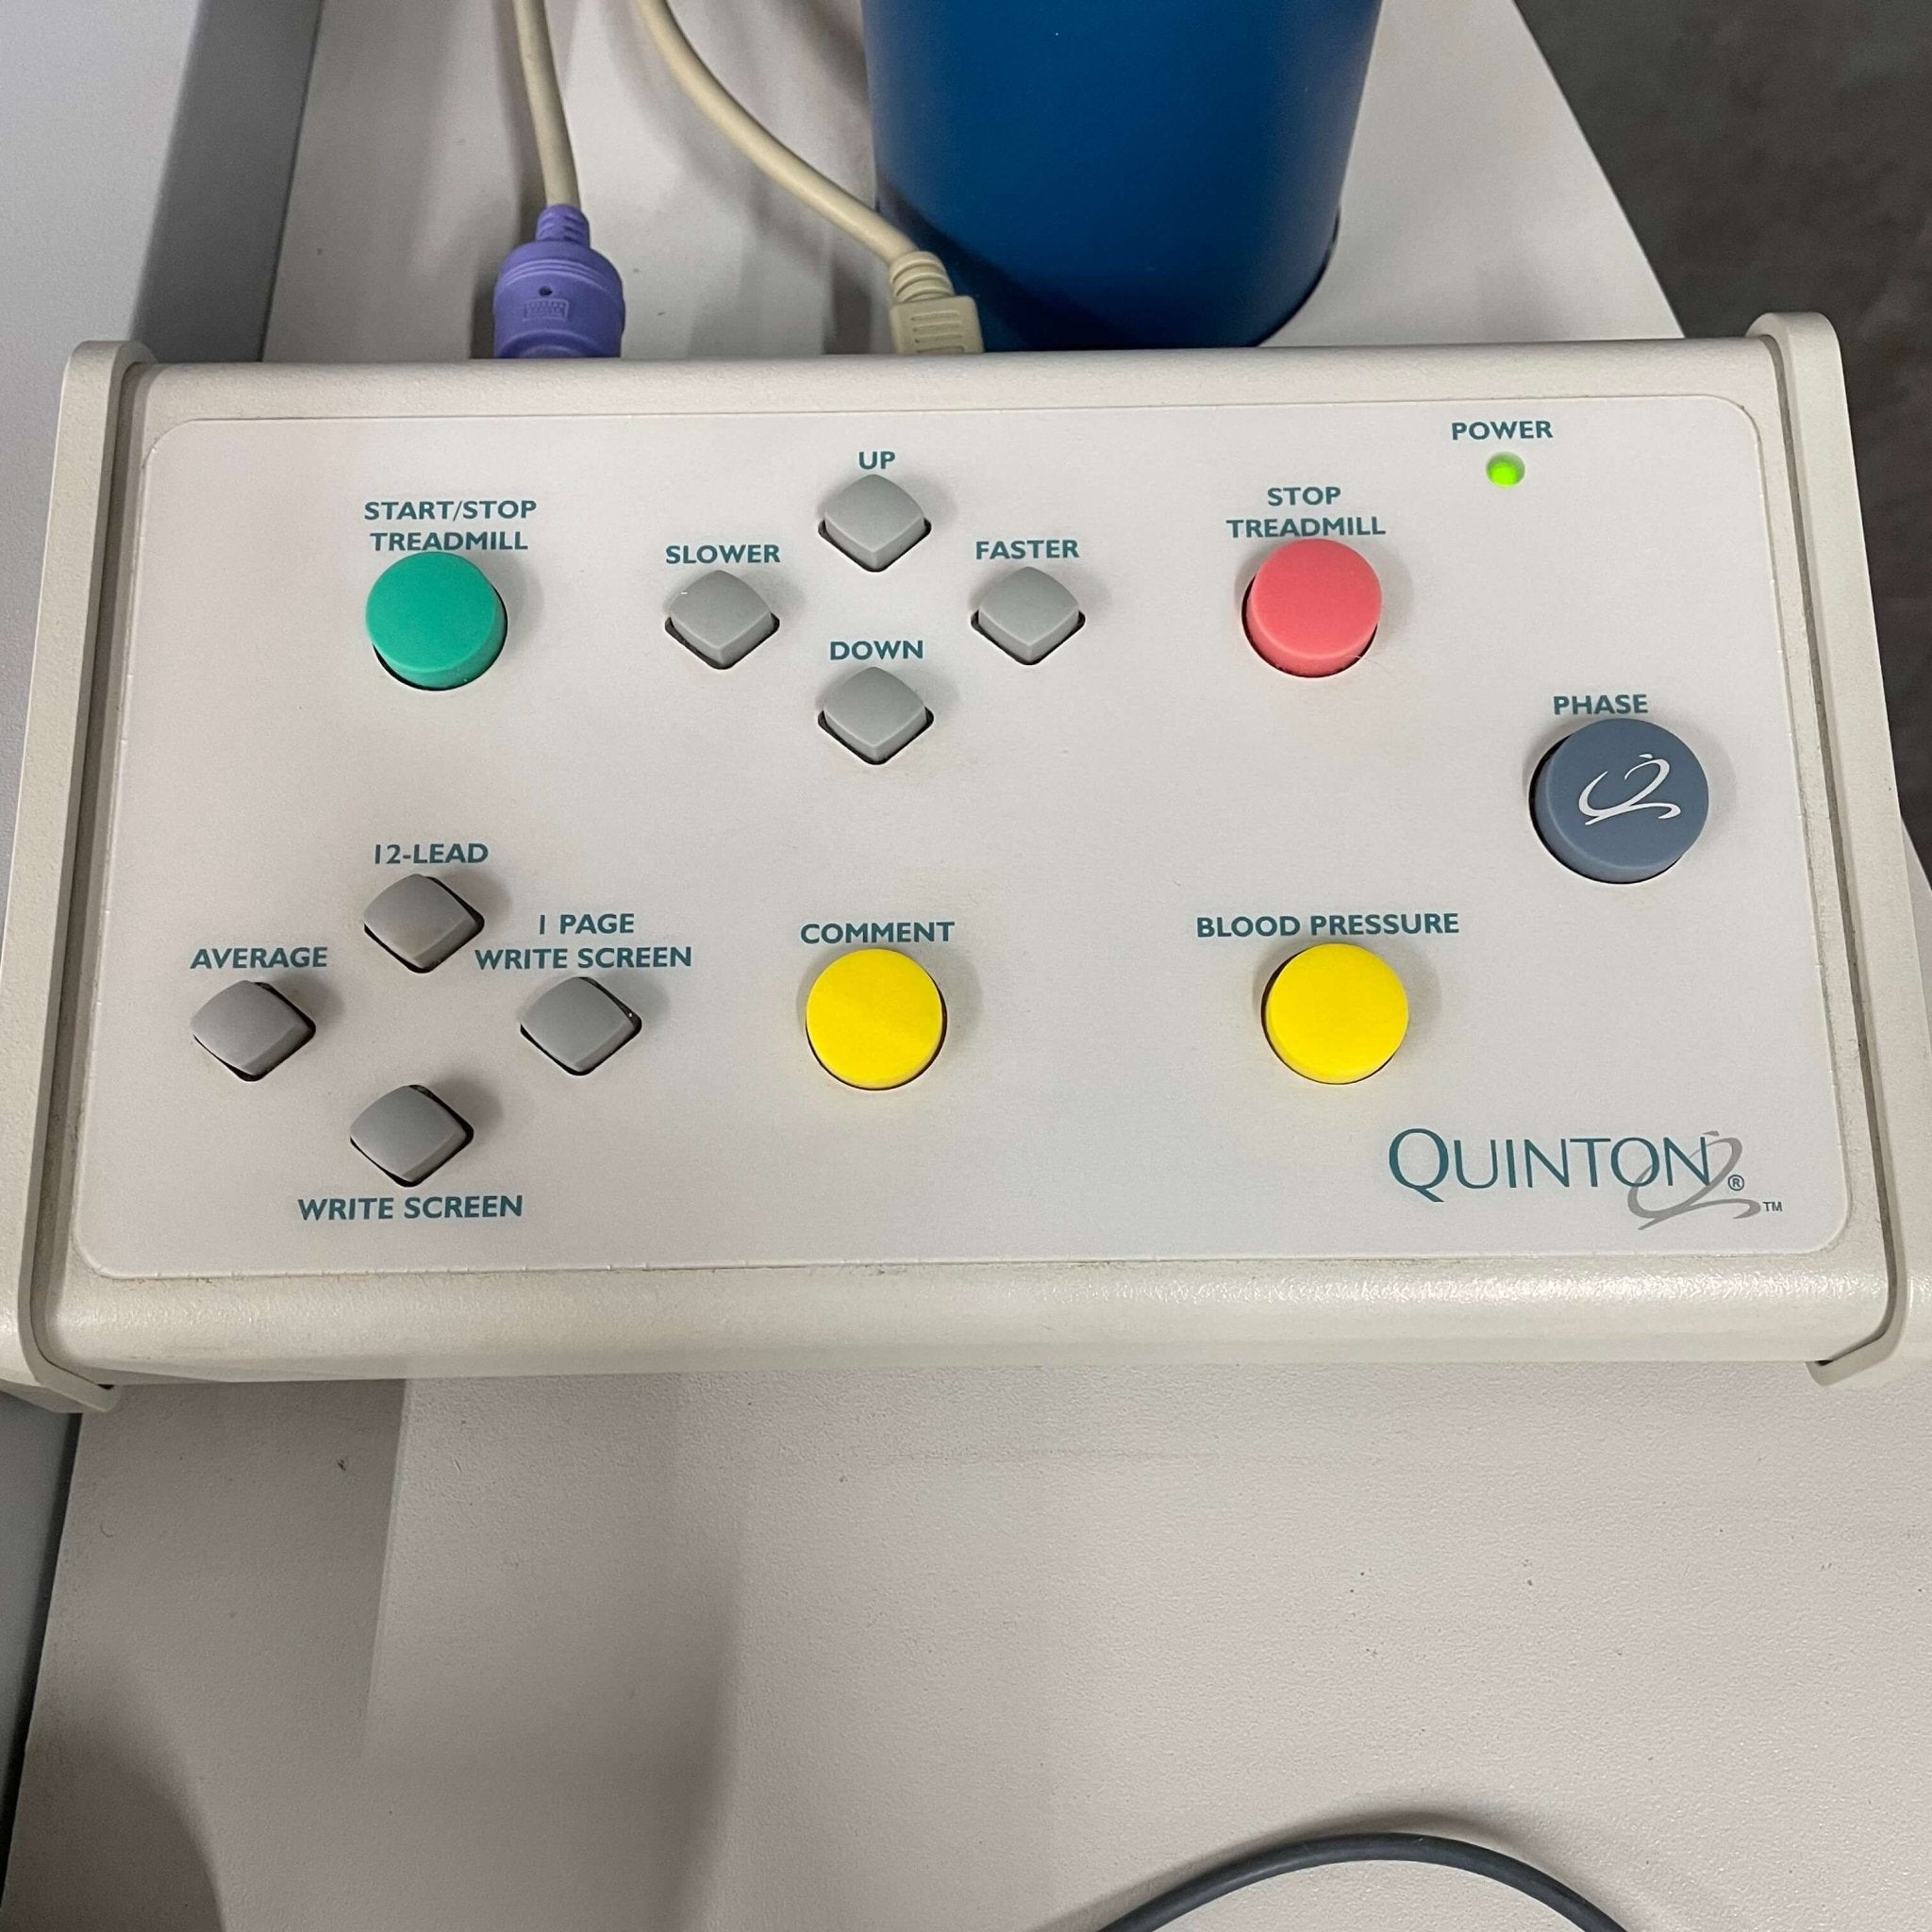 Quinton TCR-1000 Q-Stress TM55 stress system